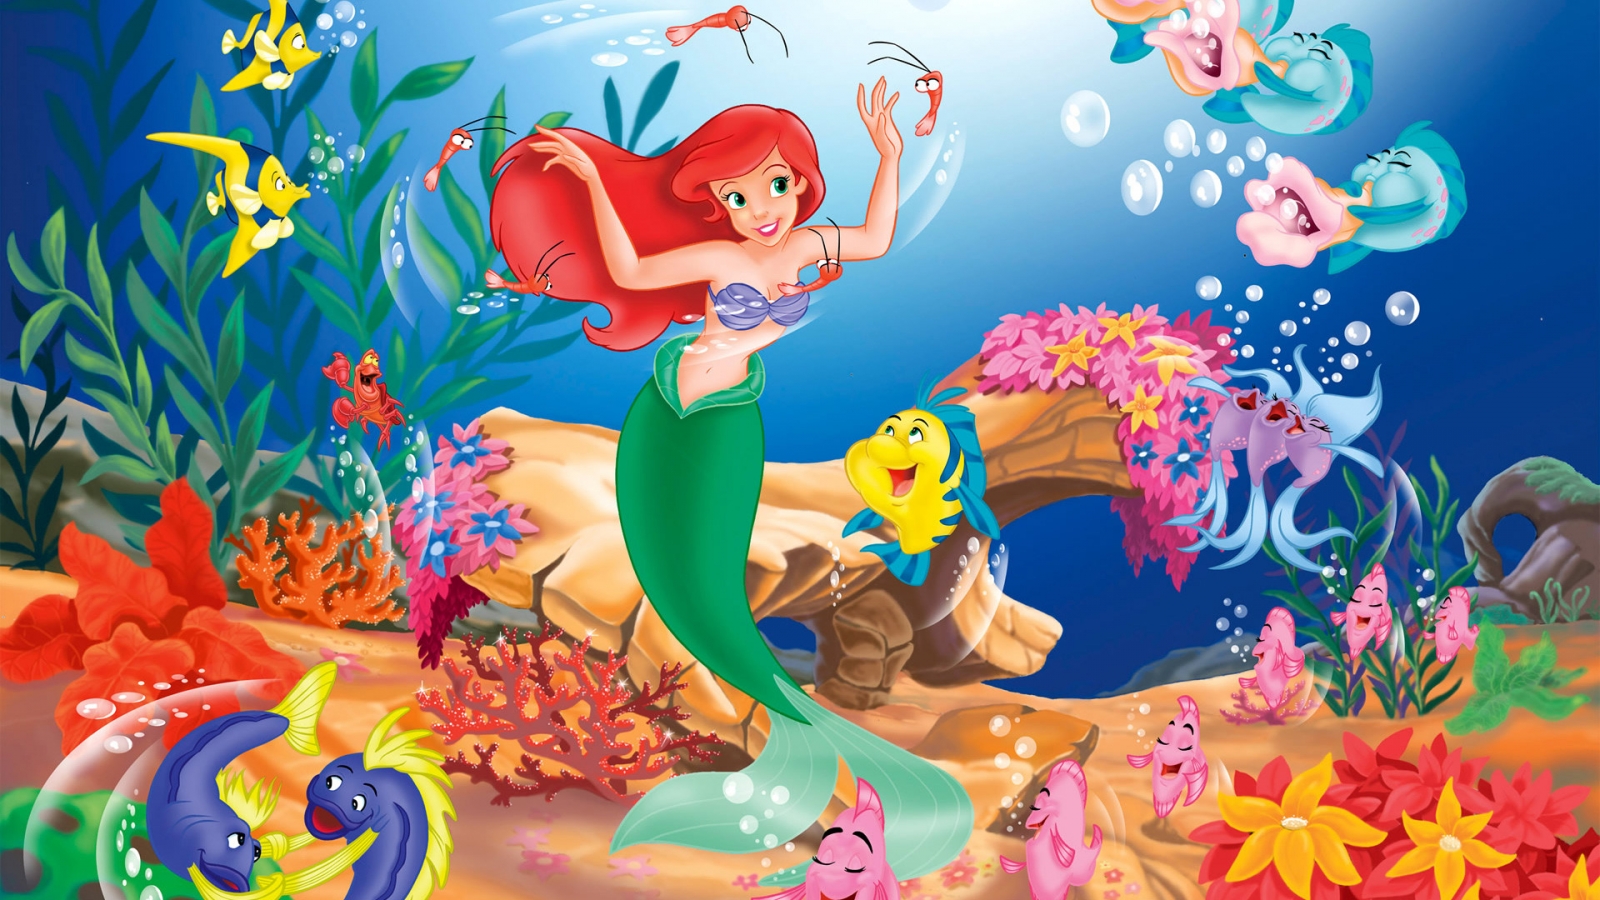 Little Mermaid Cartoon for 1600 x 900 HDTV resolution